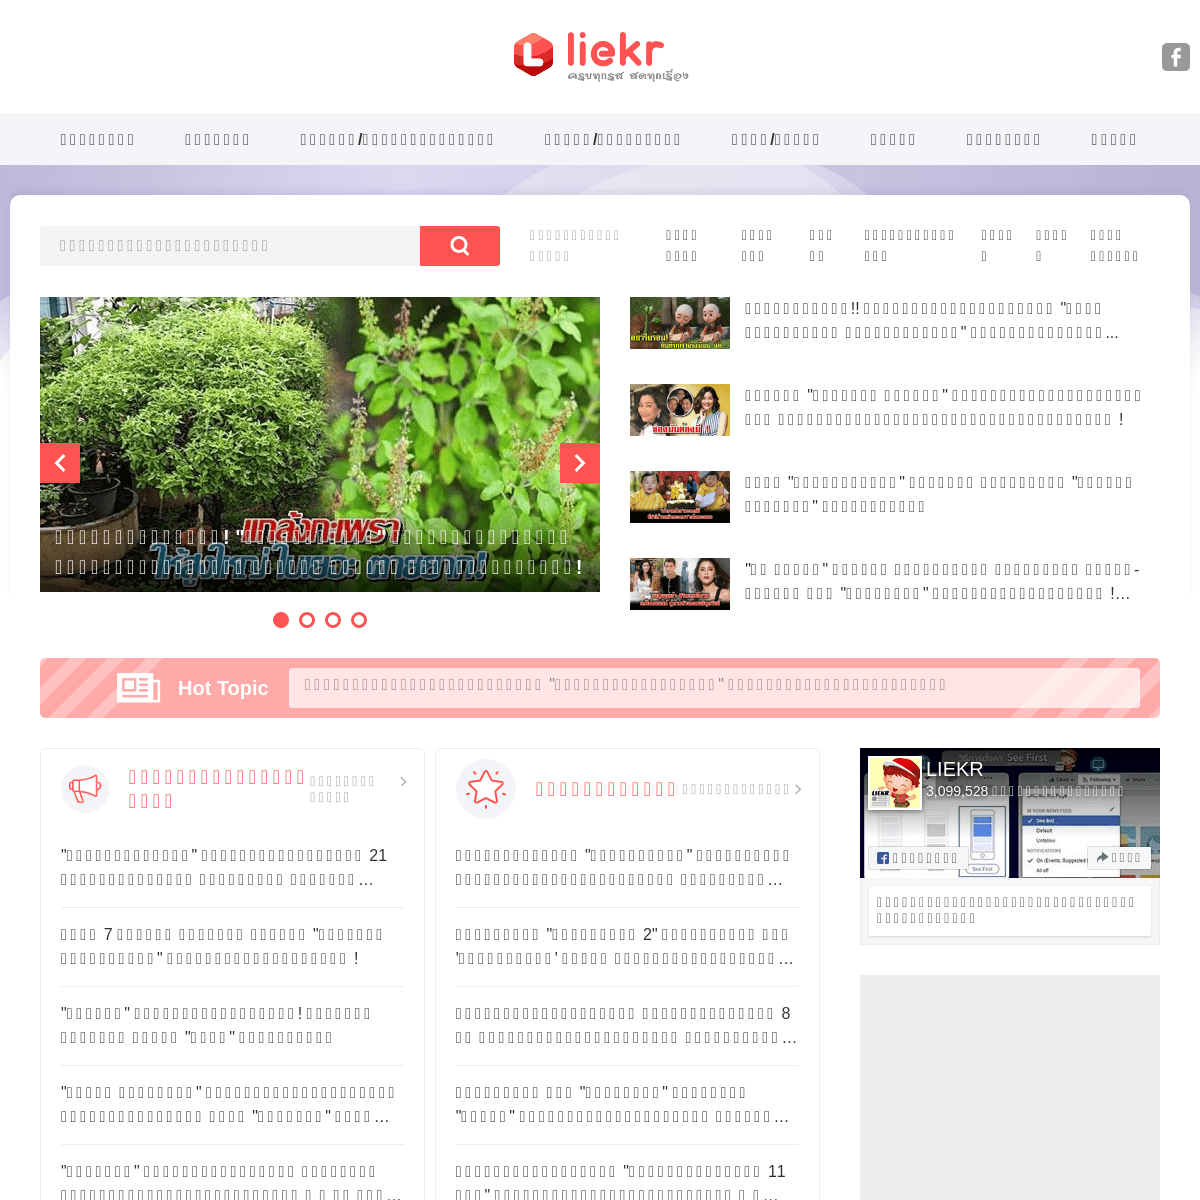 A complete backup of liekr.com